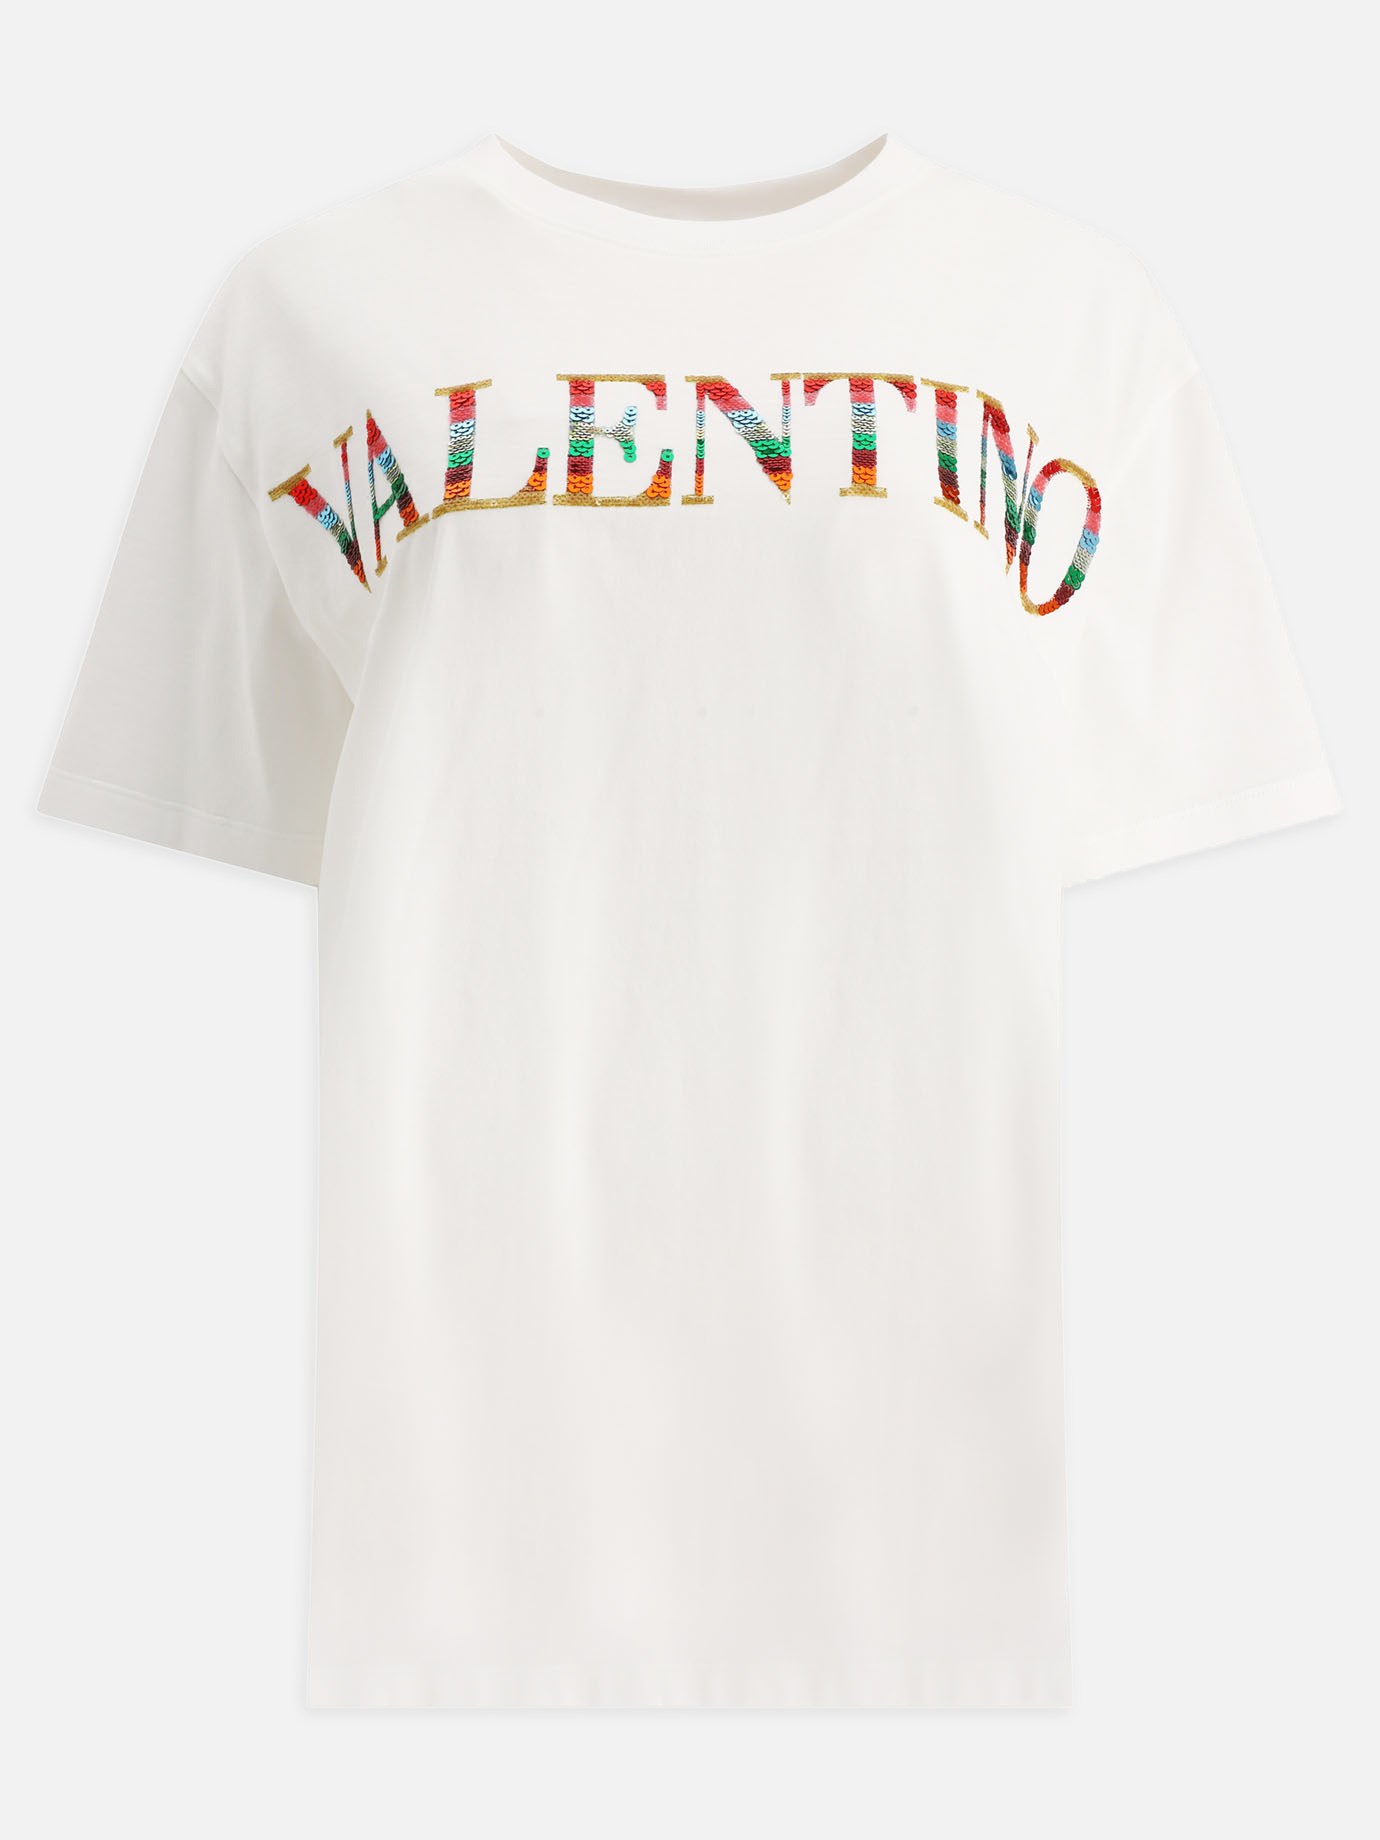  Sequin Valentino  t-shirtby Valentino - 2